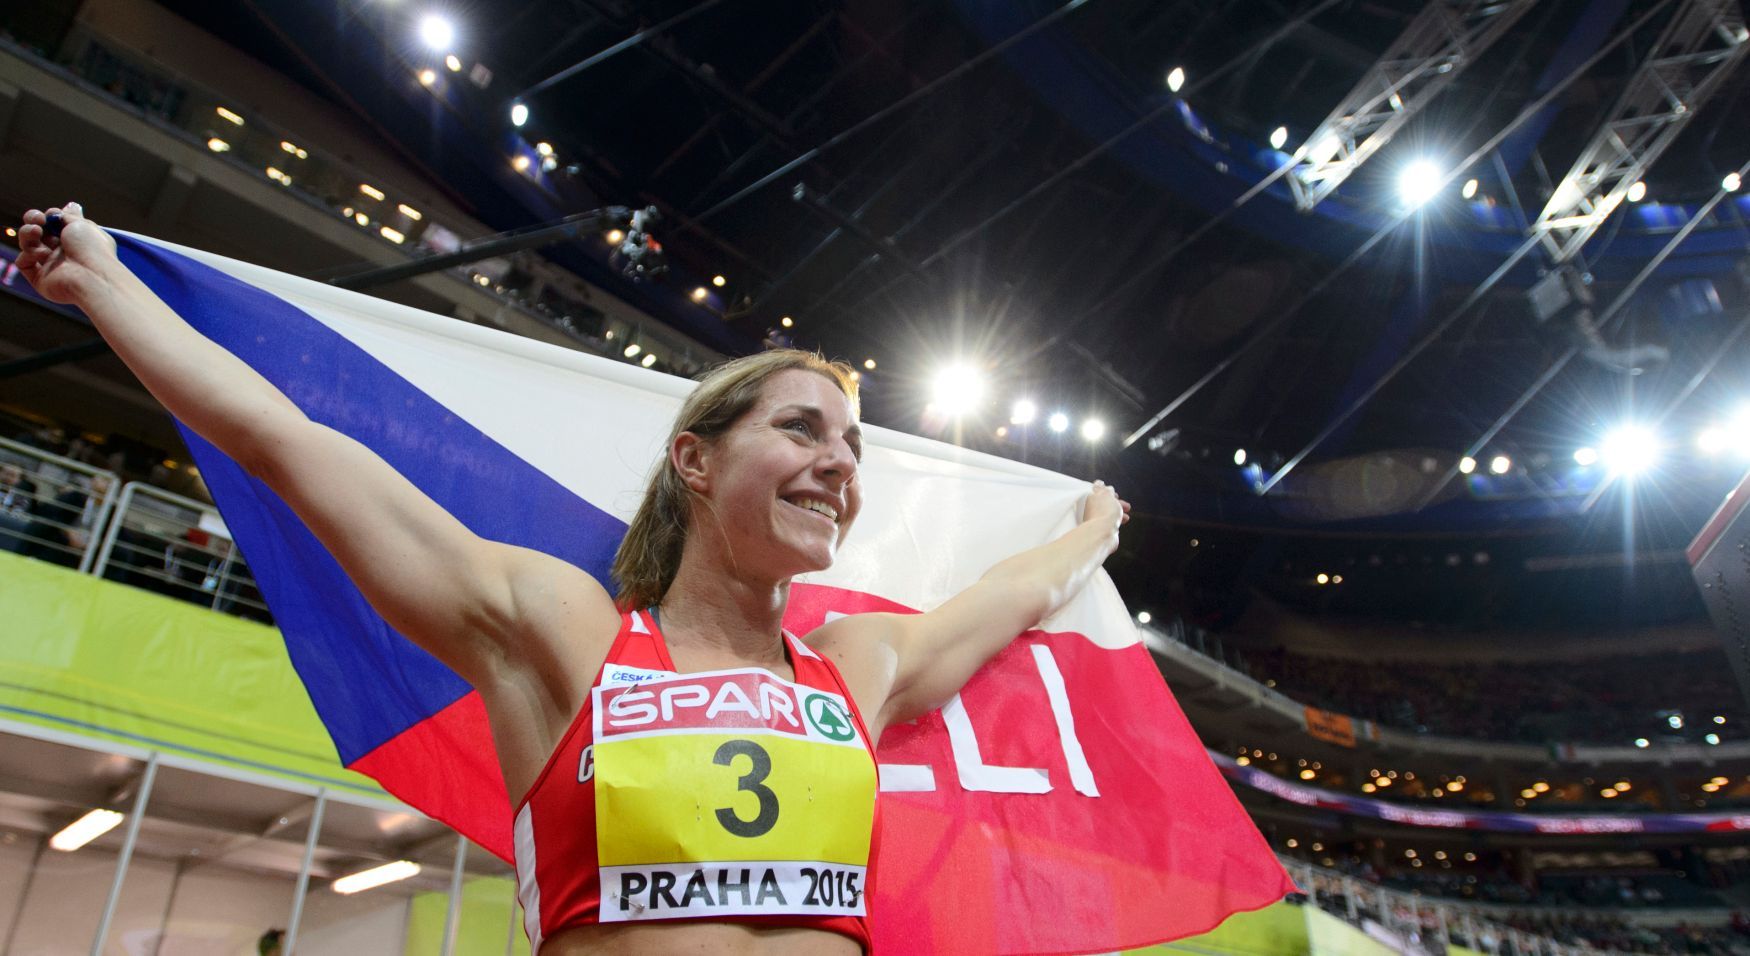 HME 2015 v atletice v Praze: Vícebojařka Eliška Klučinová se raduje z bronzové medaile.